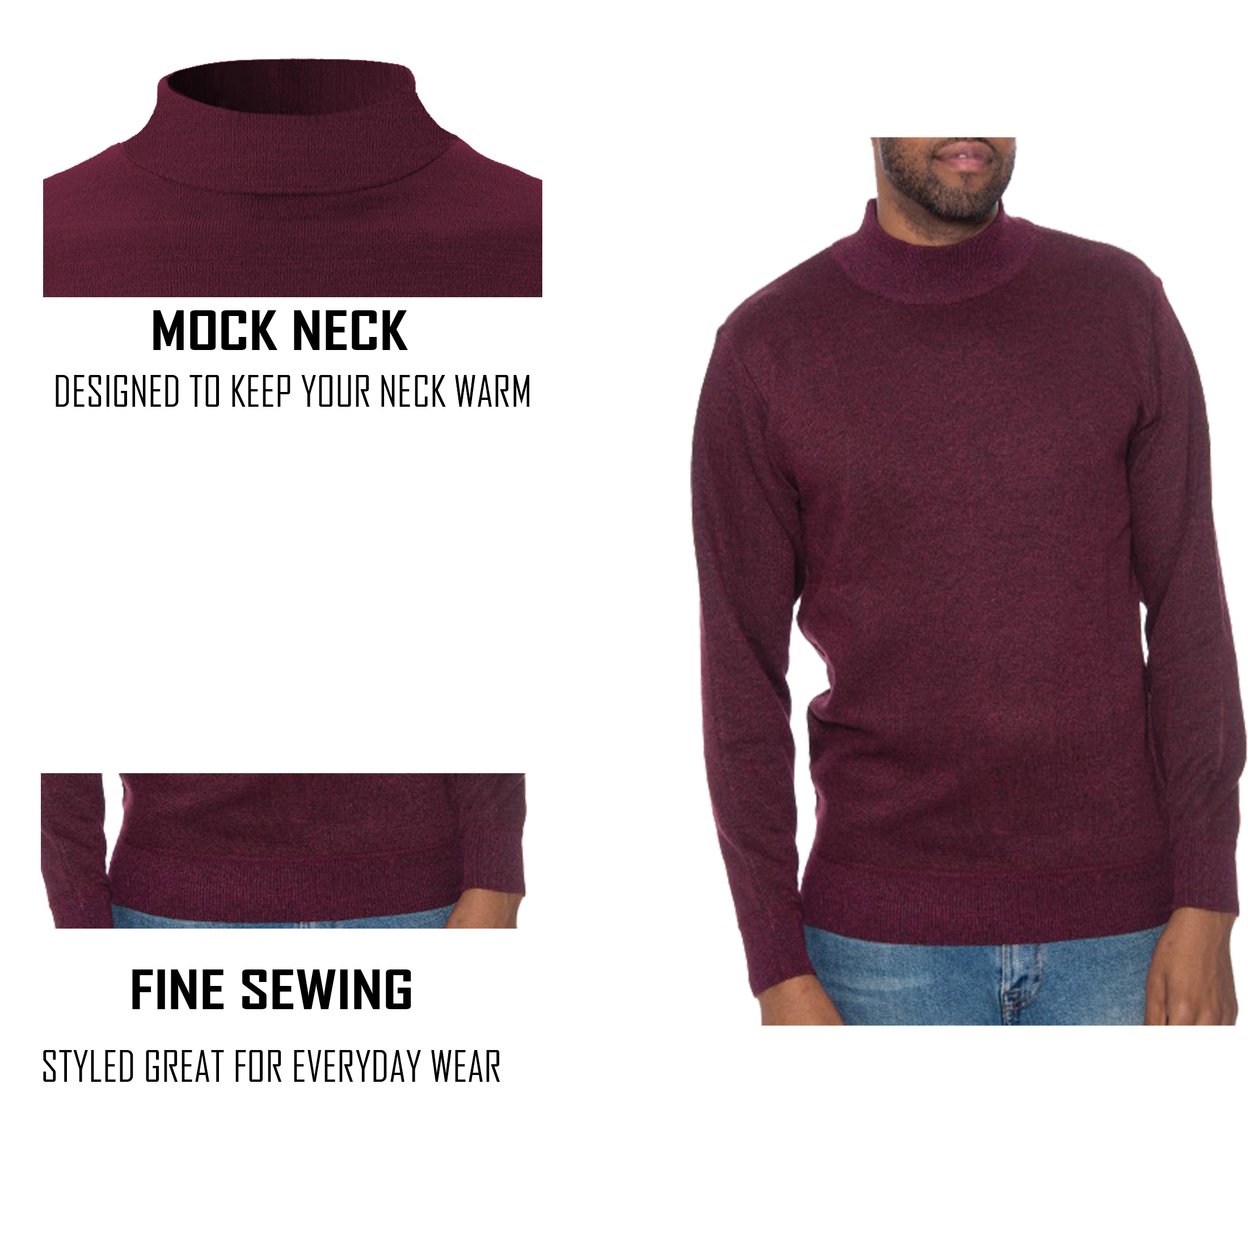 2-Pack: Men's Winter Warm Cozy Knit Slim Fit Mock Neck Sweater - White & Charcoal, Medium